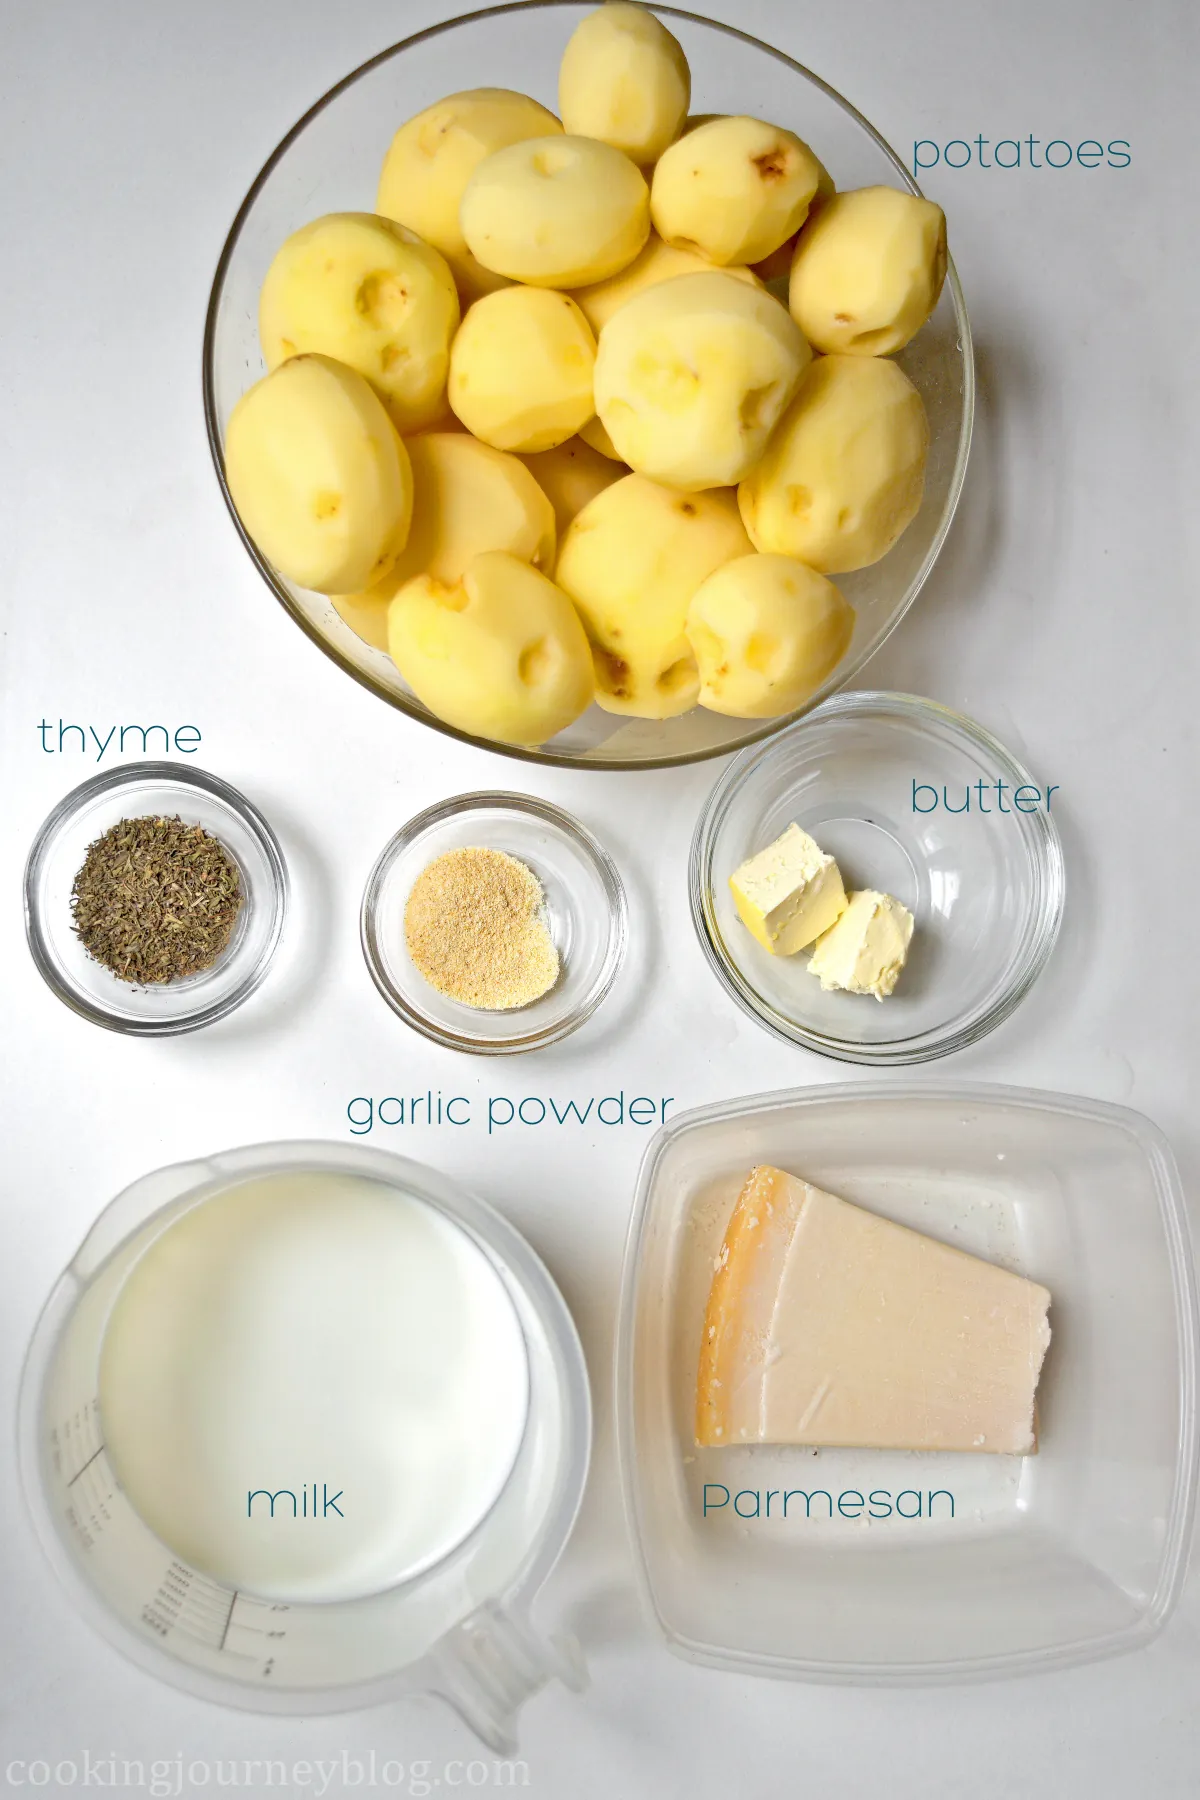 Ingredients for Hasselback potato gratin: potatoes, thyme, garlic powder, butter, milk and Parmesan